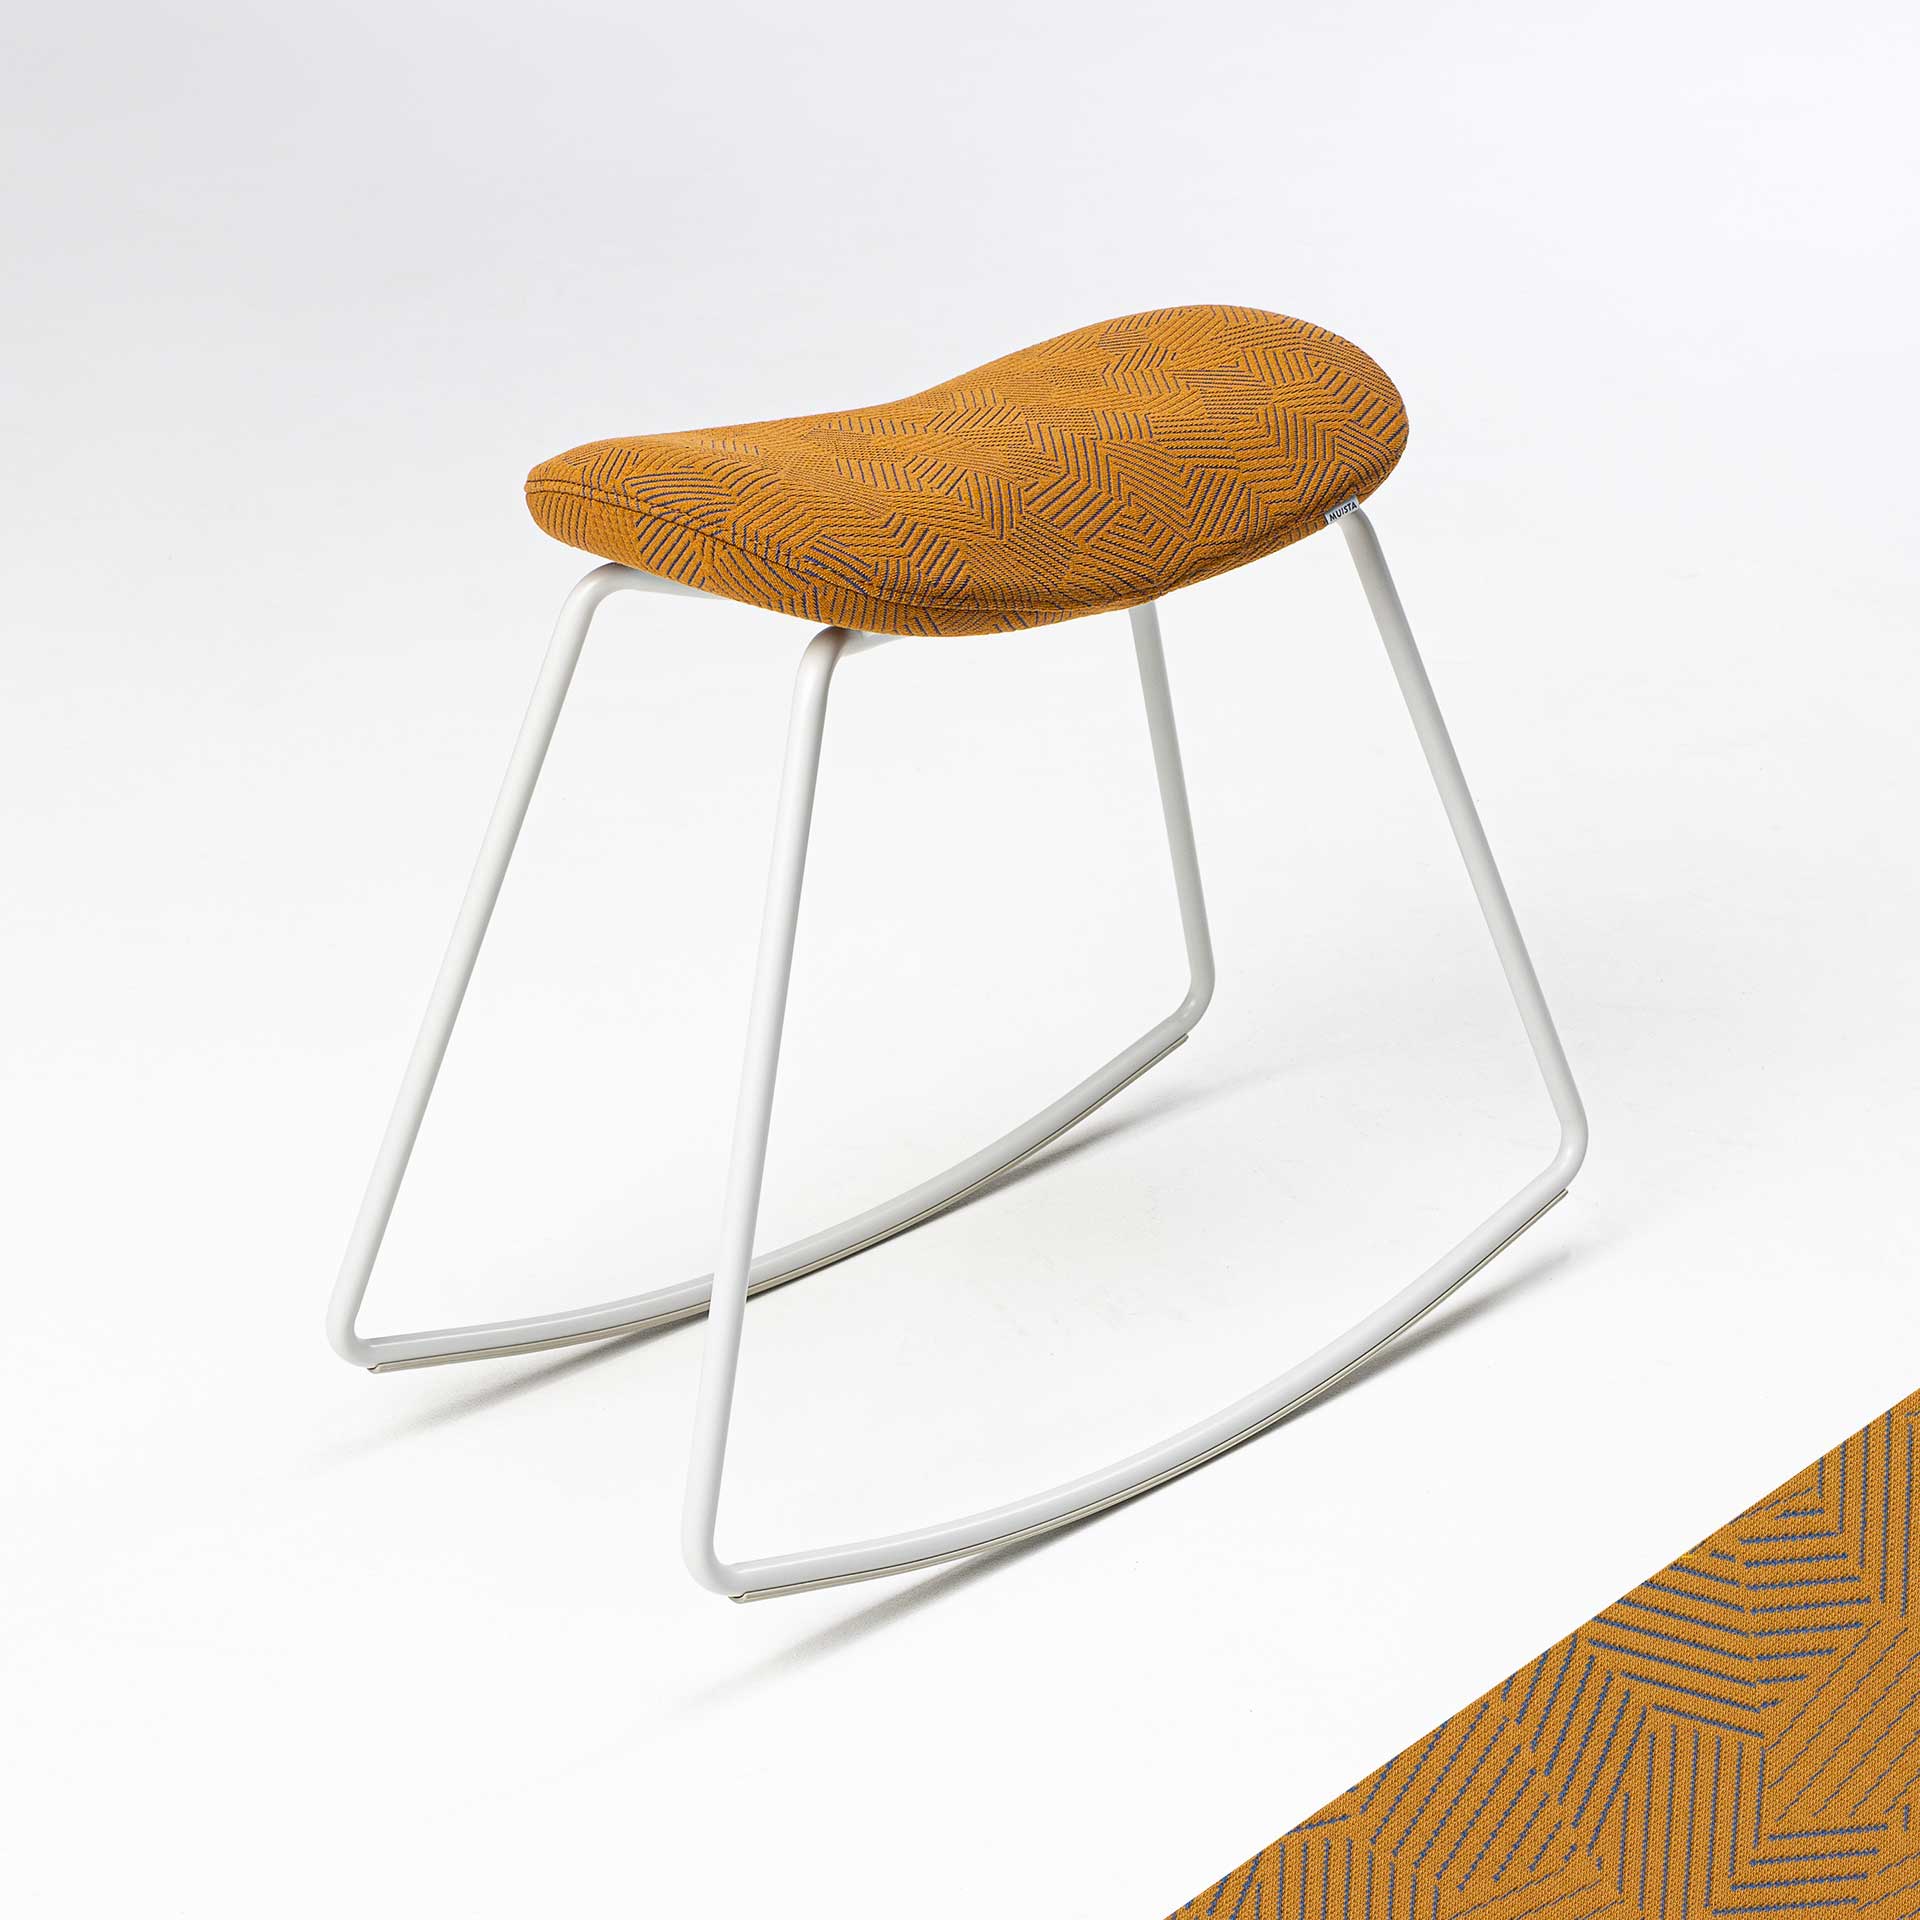 Jojiko-chair / DazzleBrown gray